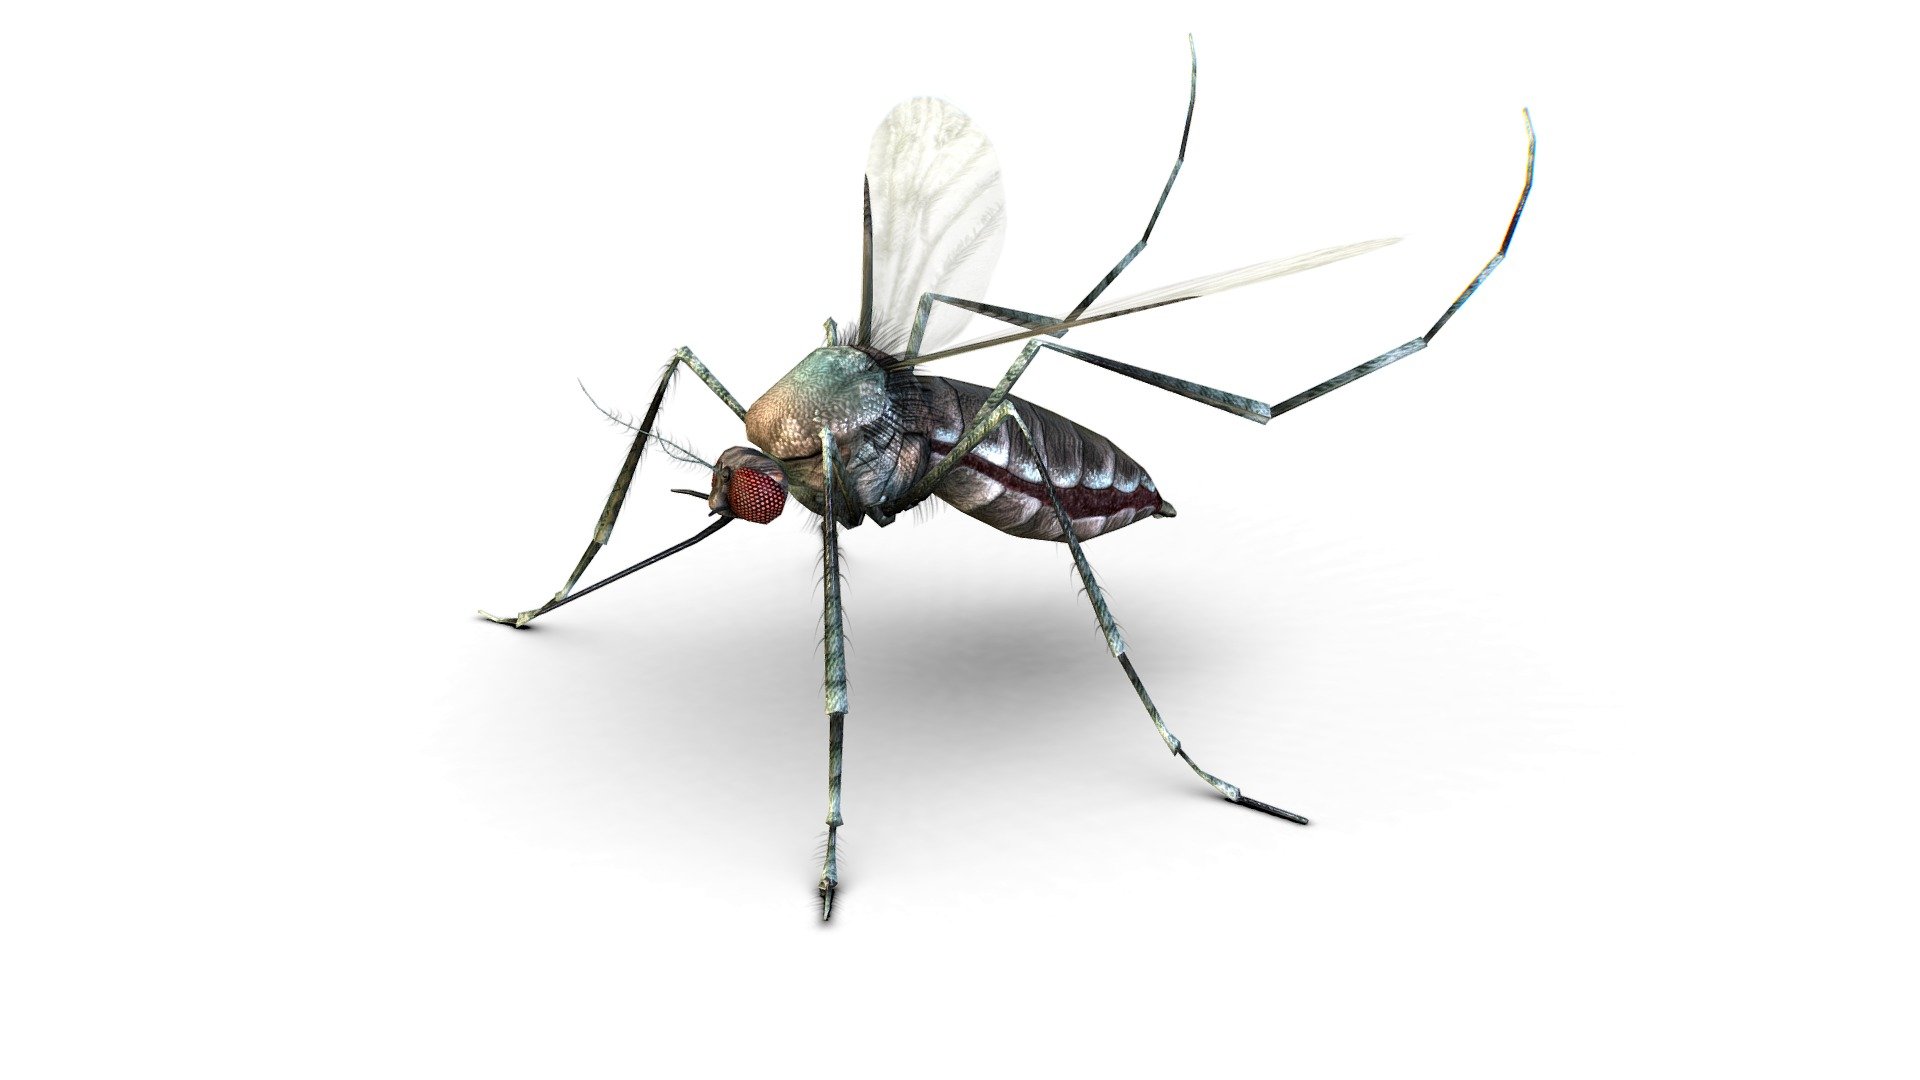 LowPoly Realistic Mosquito - 1024x1024 texture size (nirmal,difuse,specular) - LowPoly Big Realistic Mosquito - Buy Royalty Free 3D model by Oleg Shuldiakov (@olegshuldiakov) 3d model